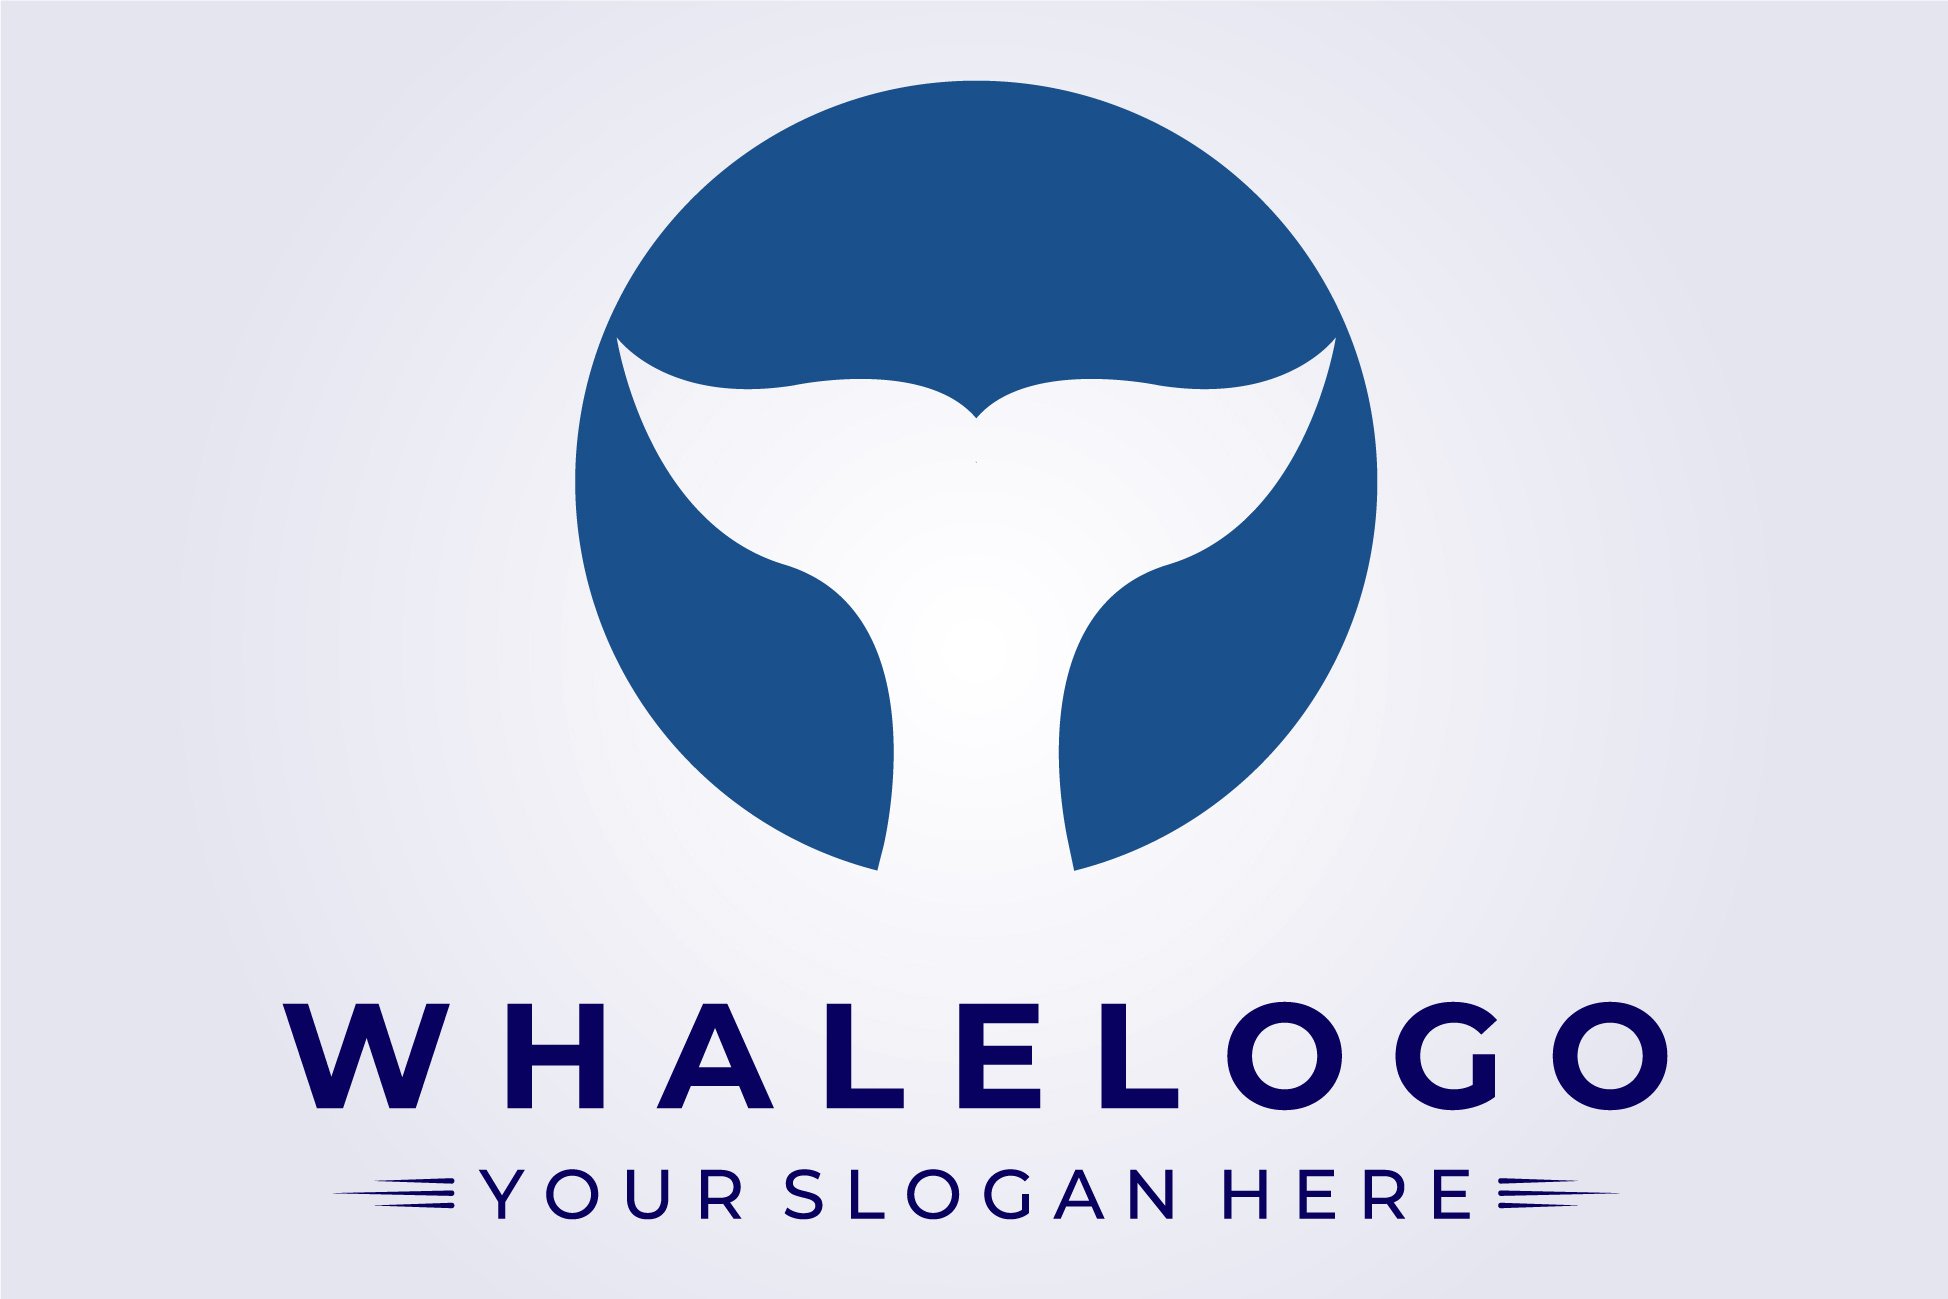 Blue whale logo vector illustration cover image.